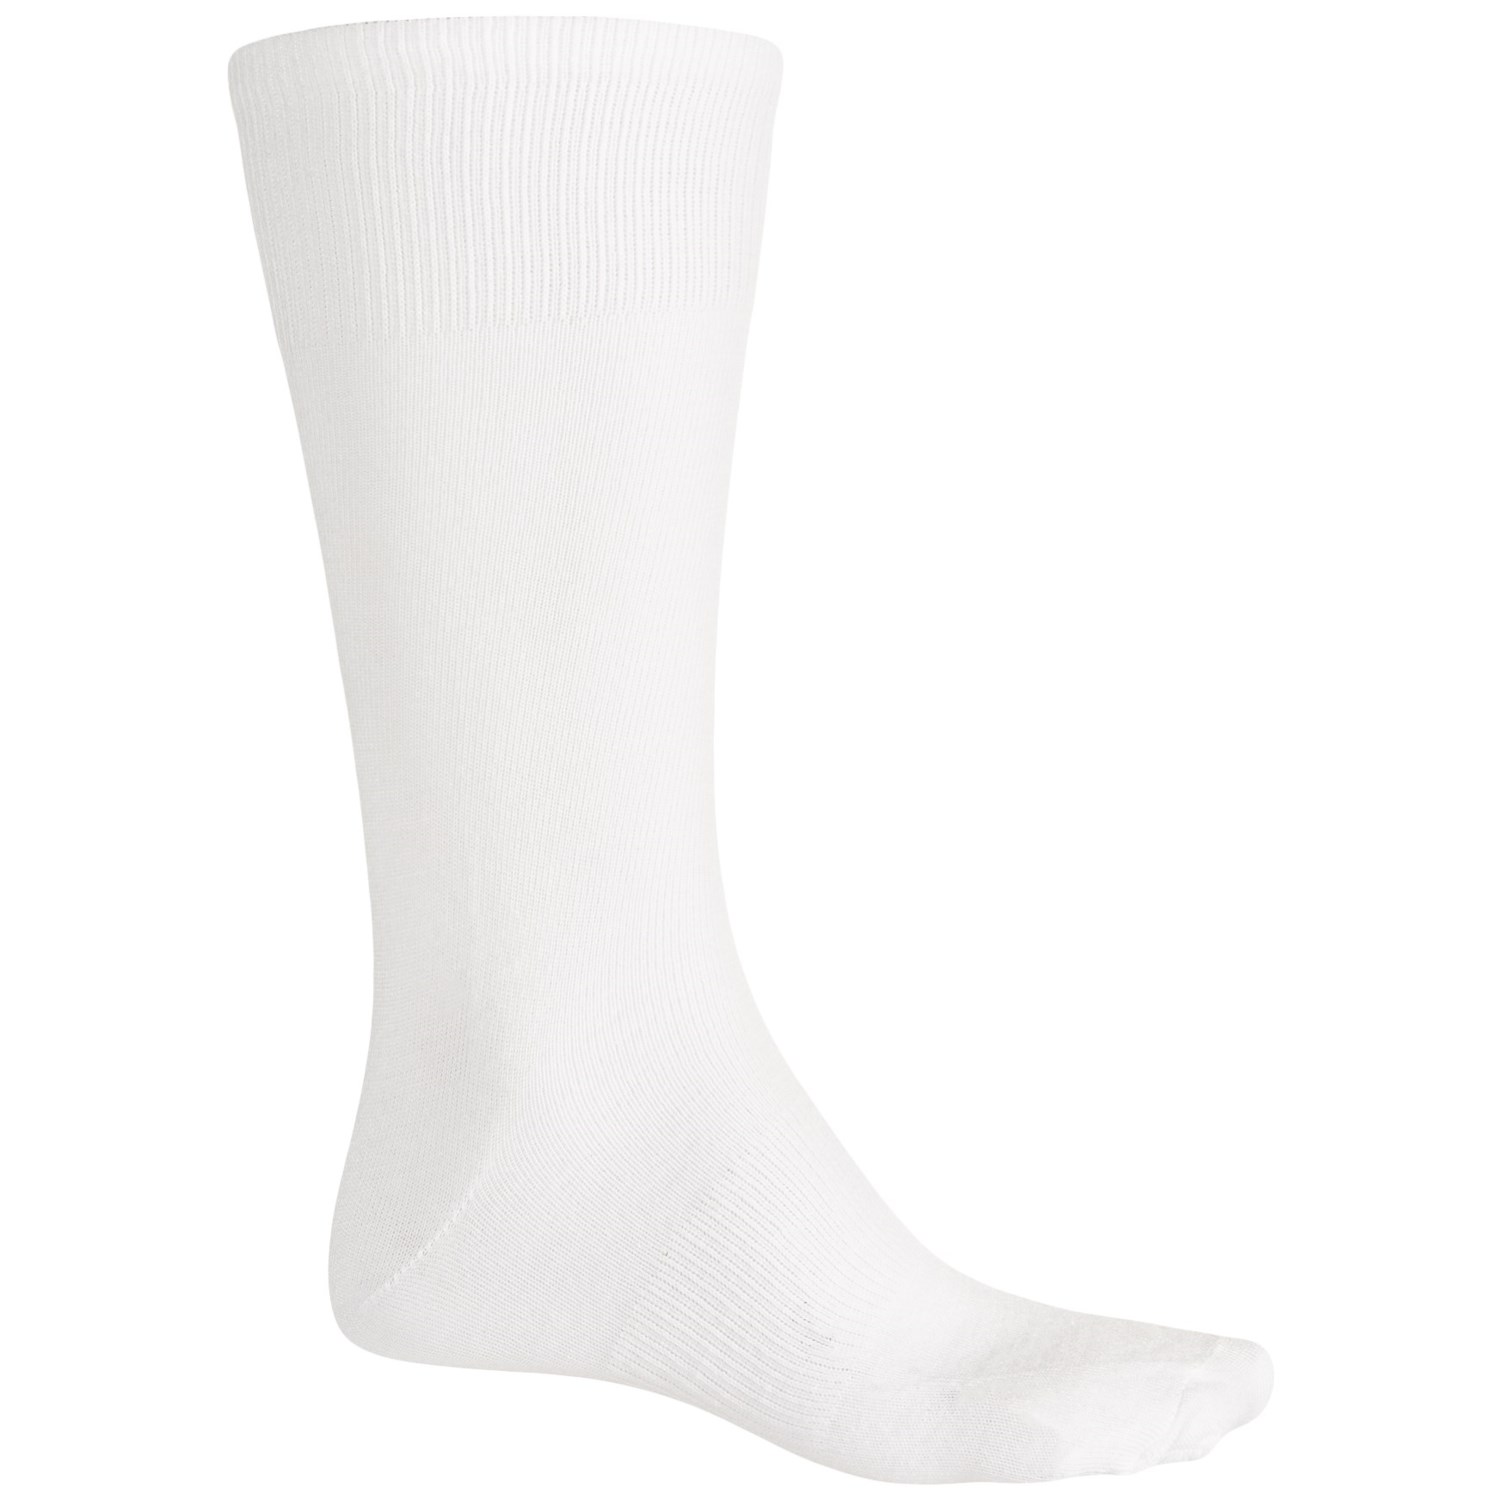 Realtree Thermolite® Liner Socks – Crew (For Men)